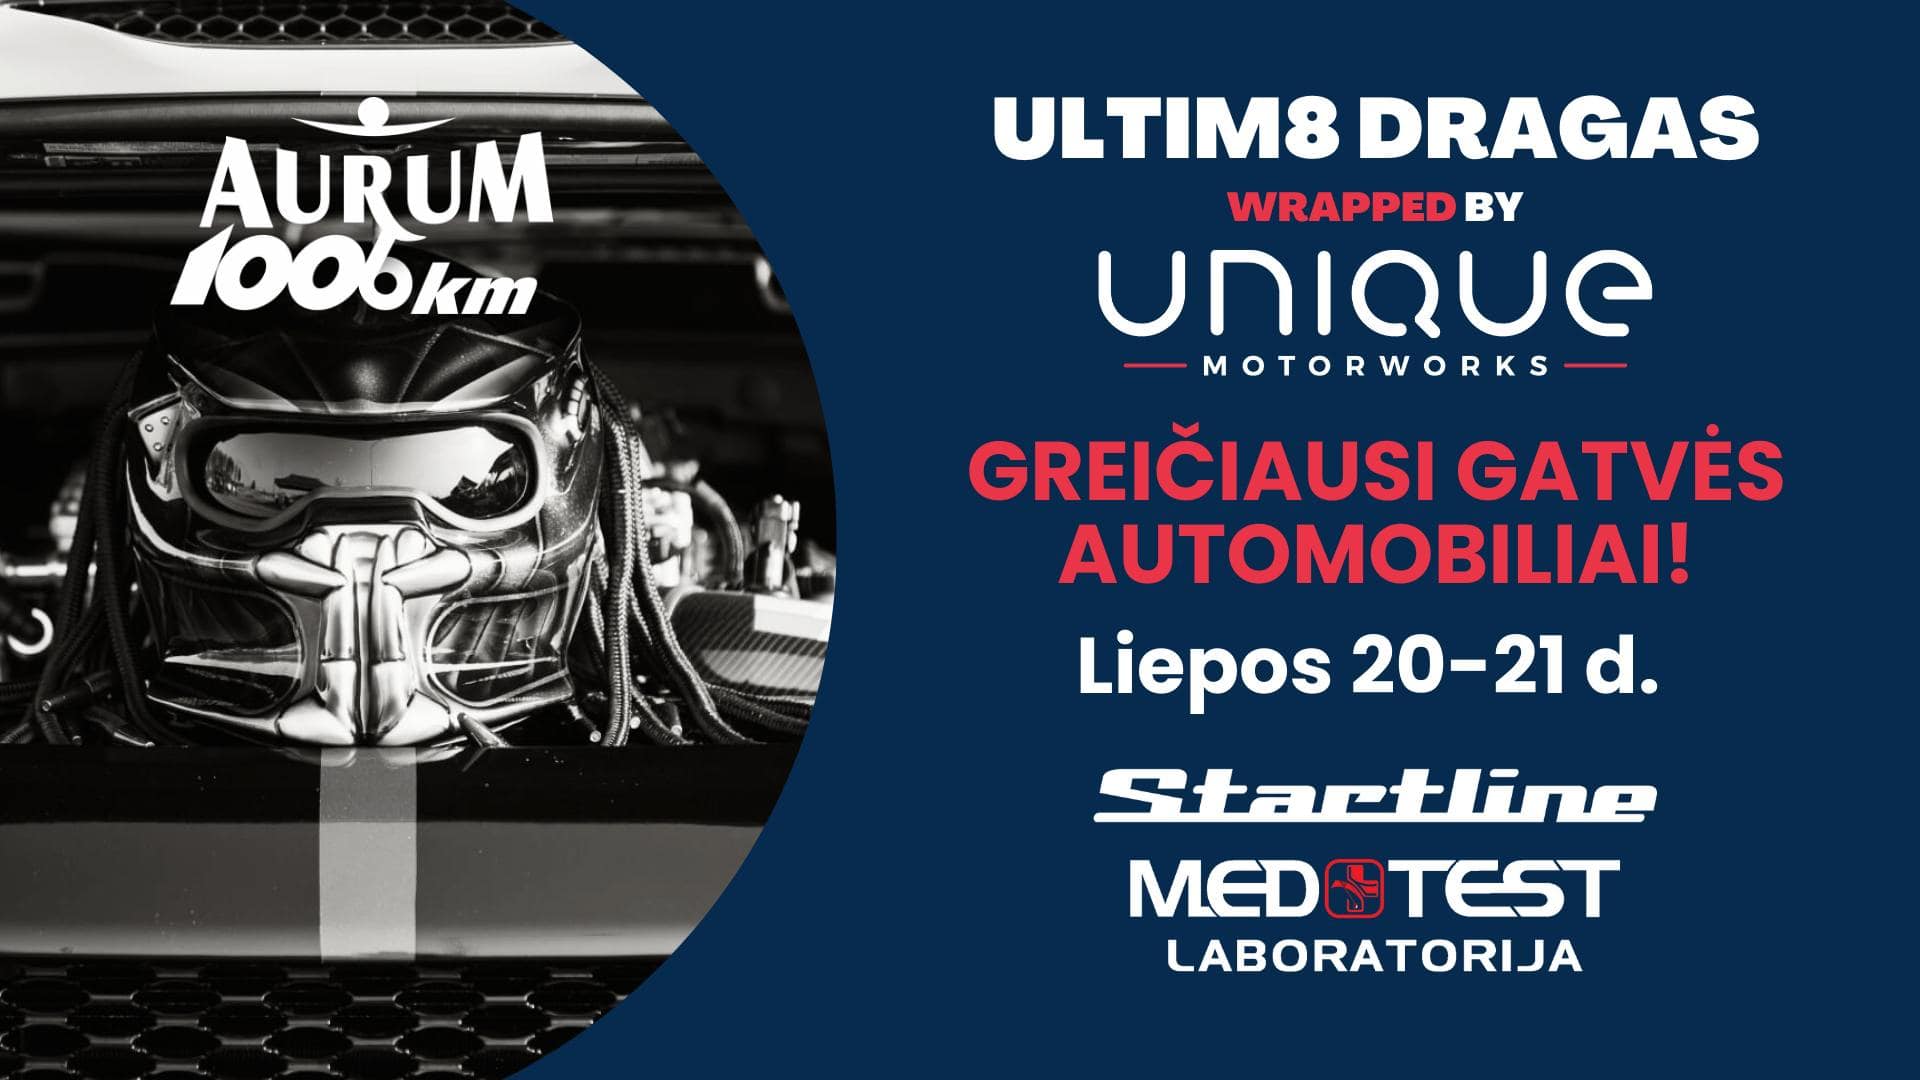 ULTIM8 Dragas by UNIQUE Motorworks